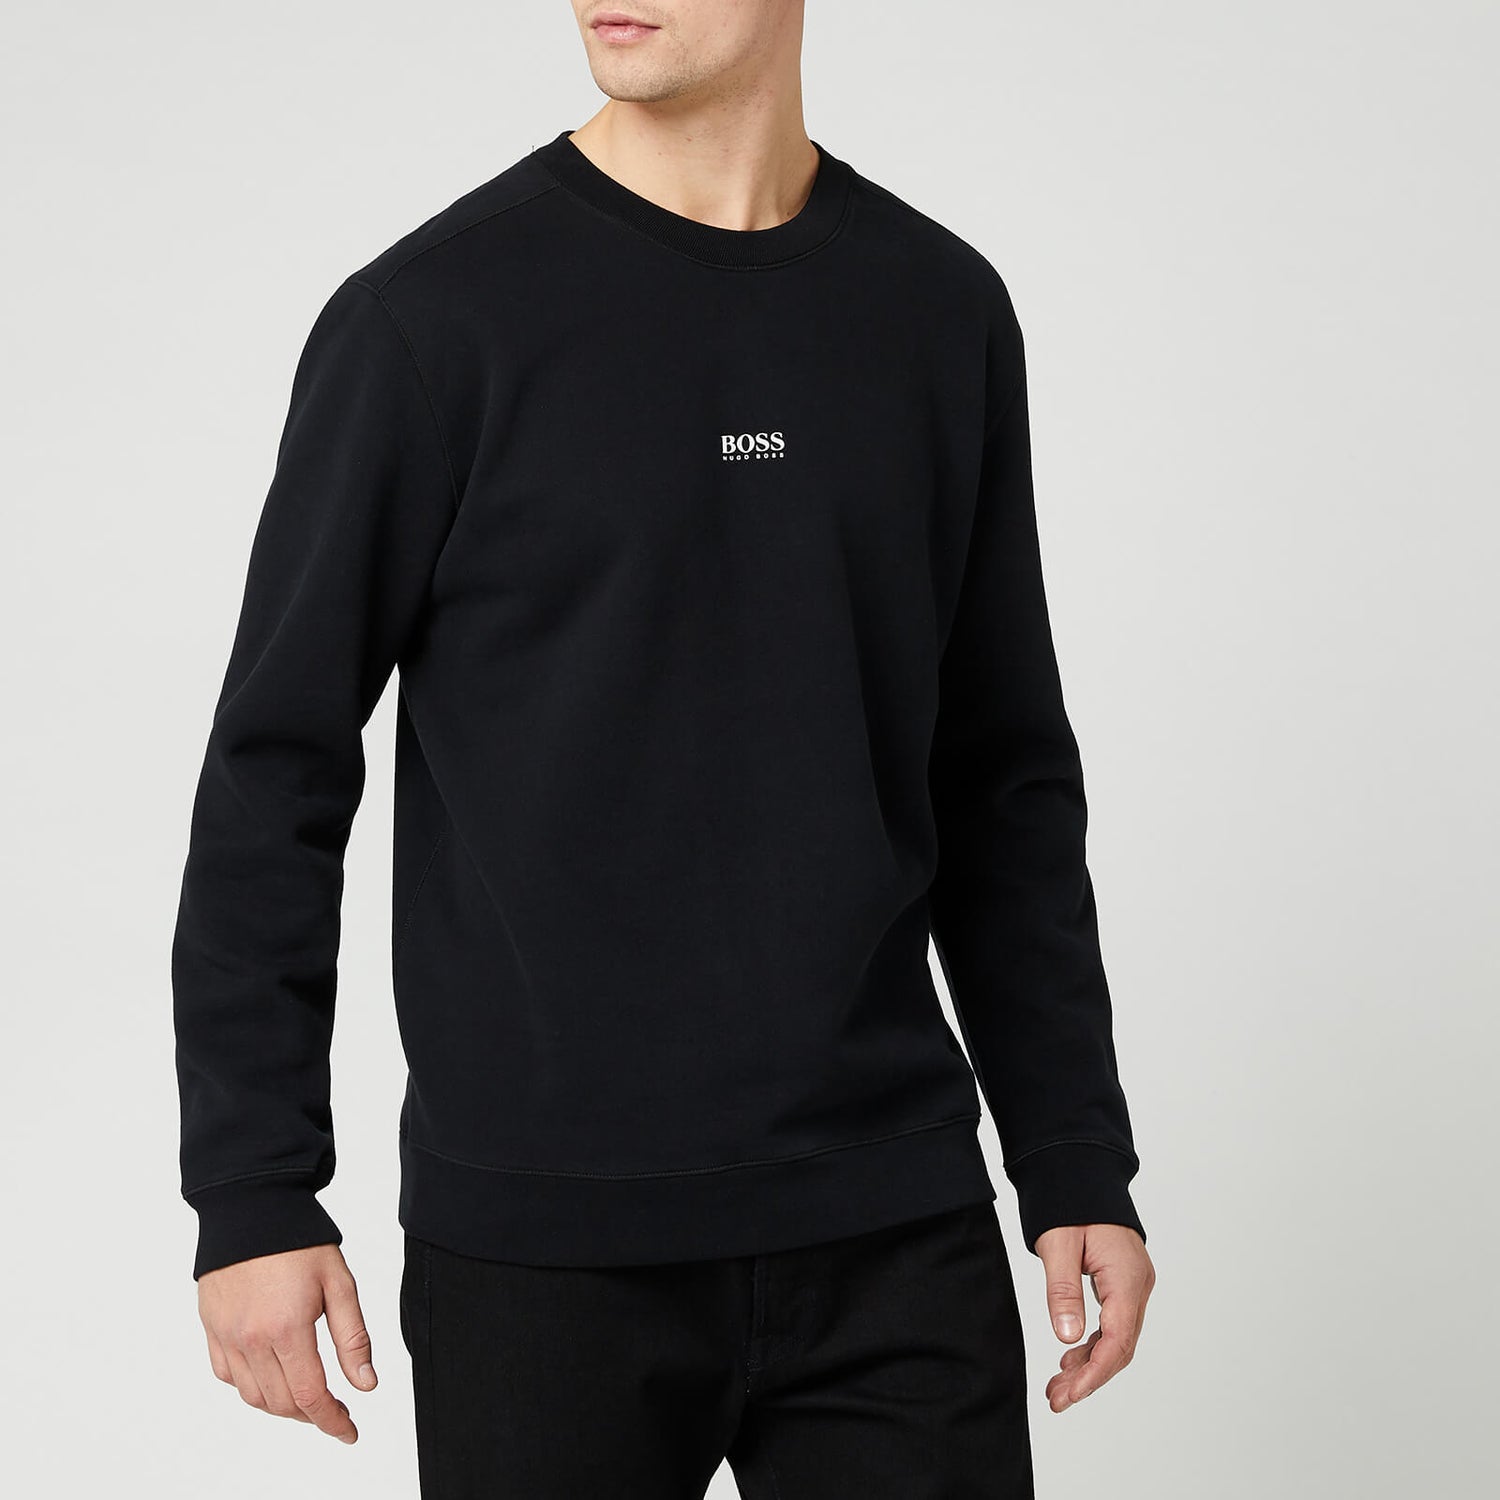 BOSS Orange Men's Weevo Relaxed Fit Sweatshirt - Black